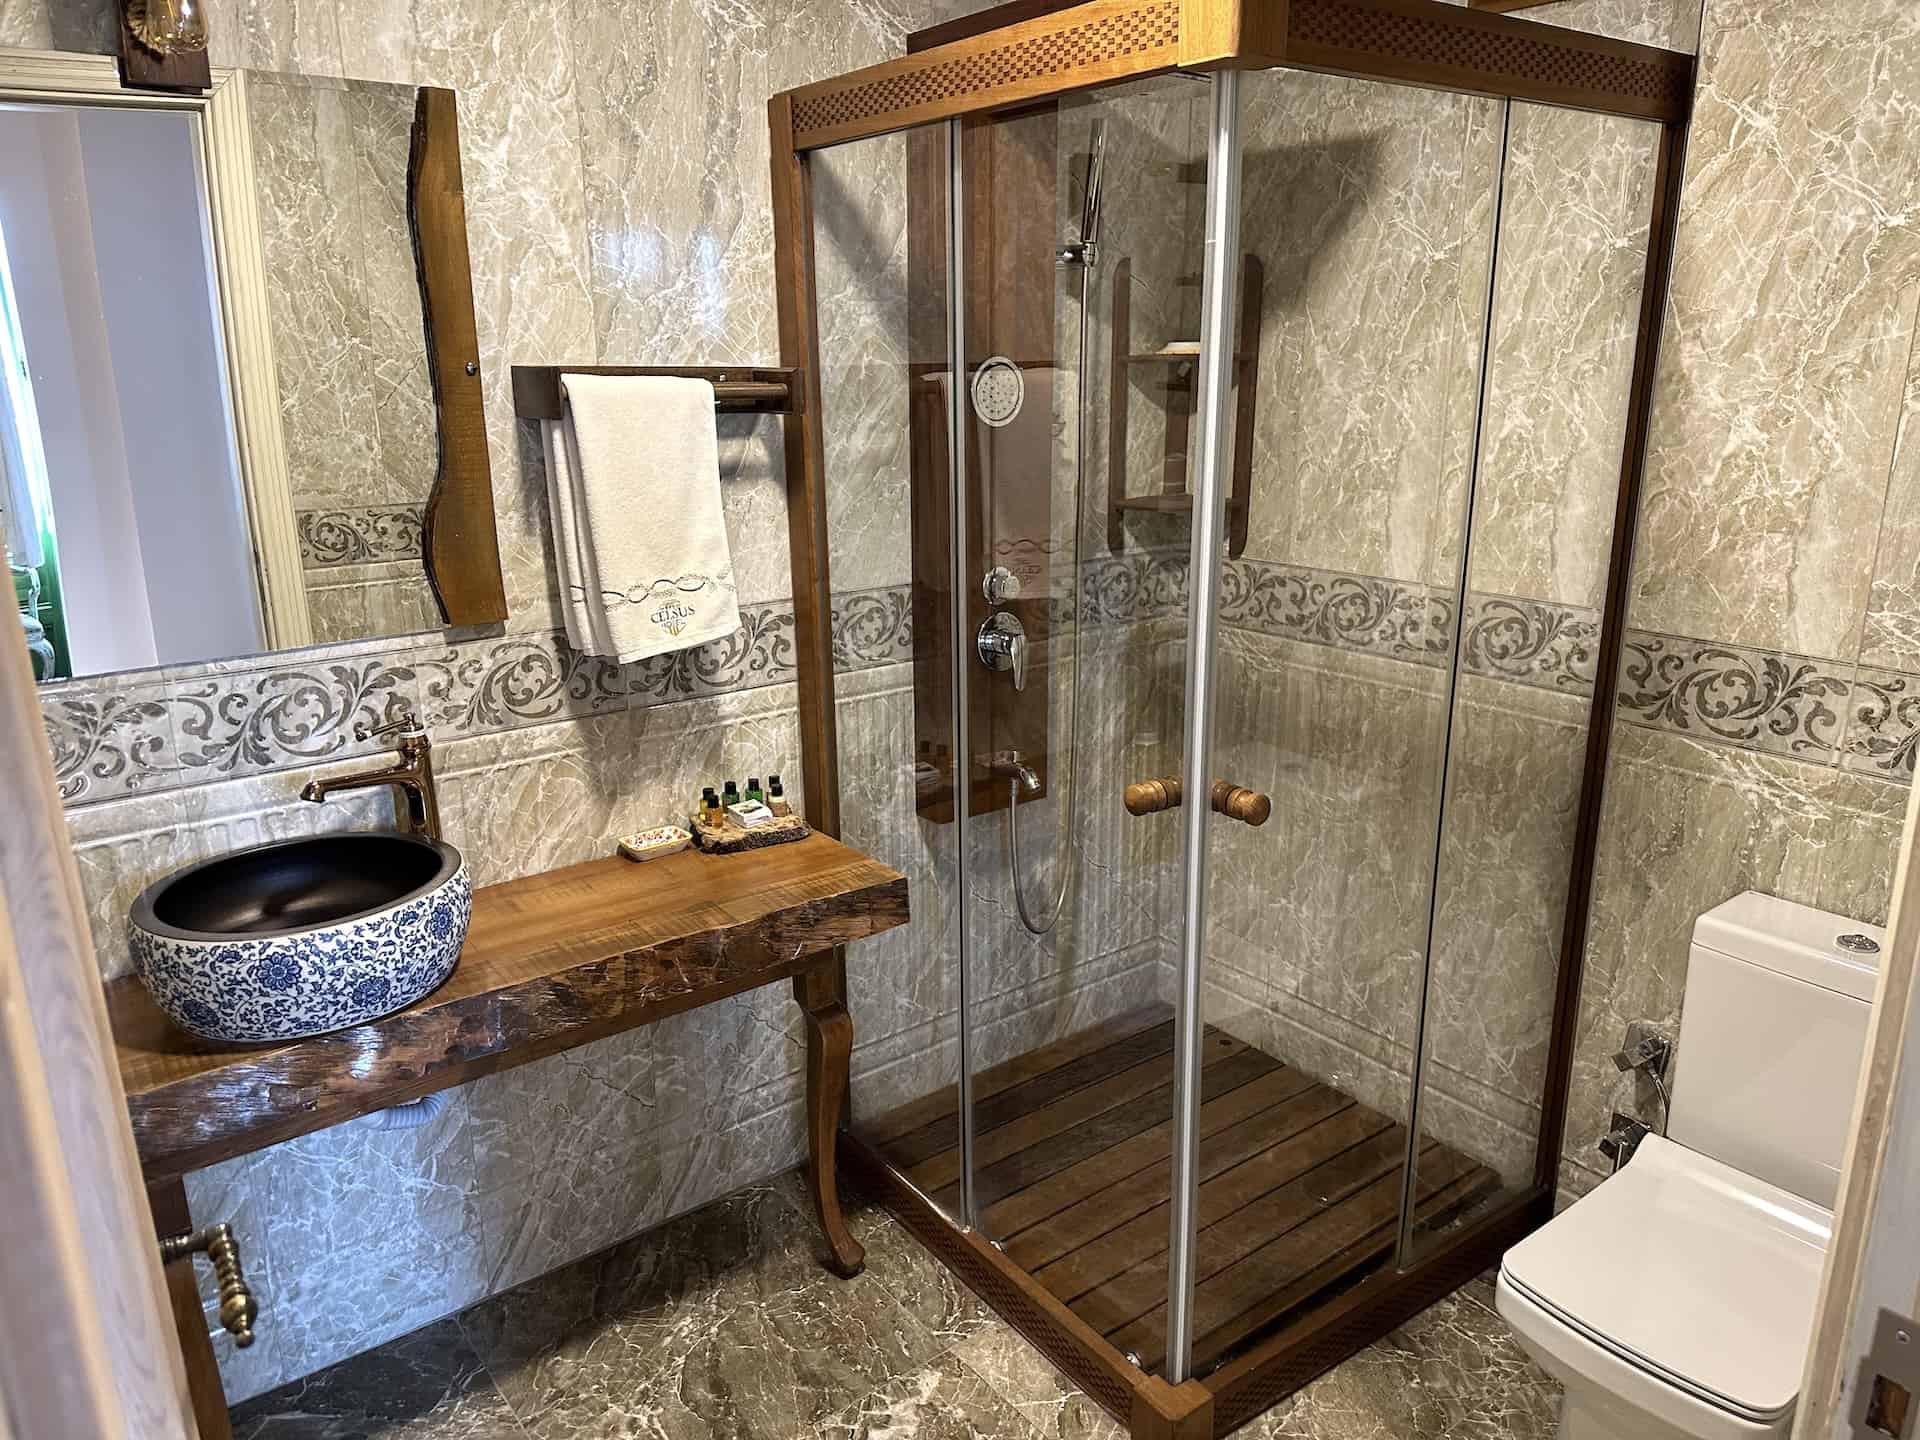 Bathroom at Celsus Hotel